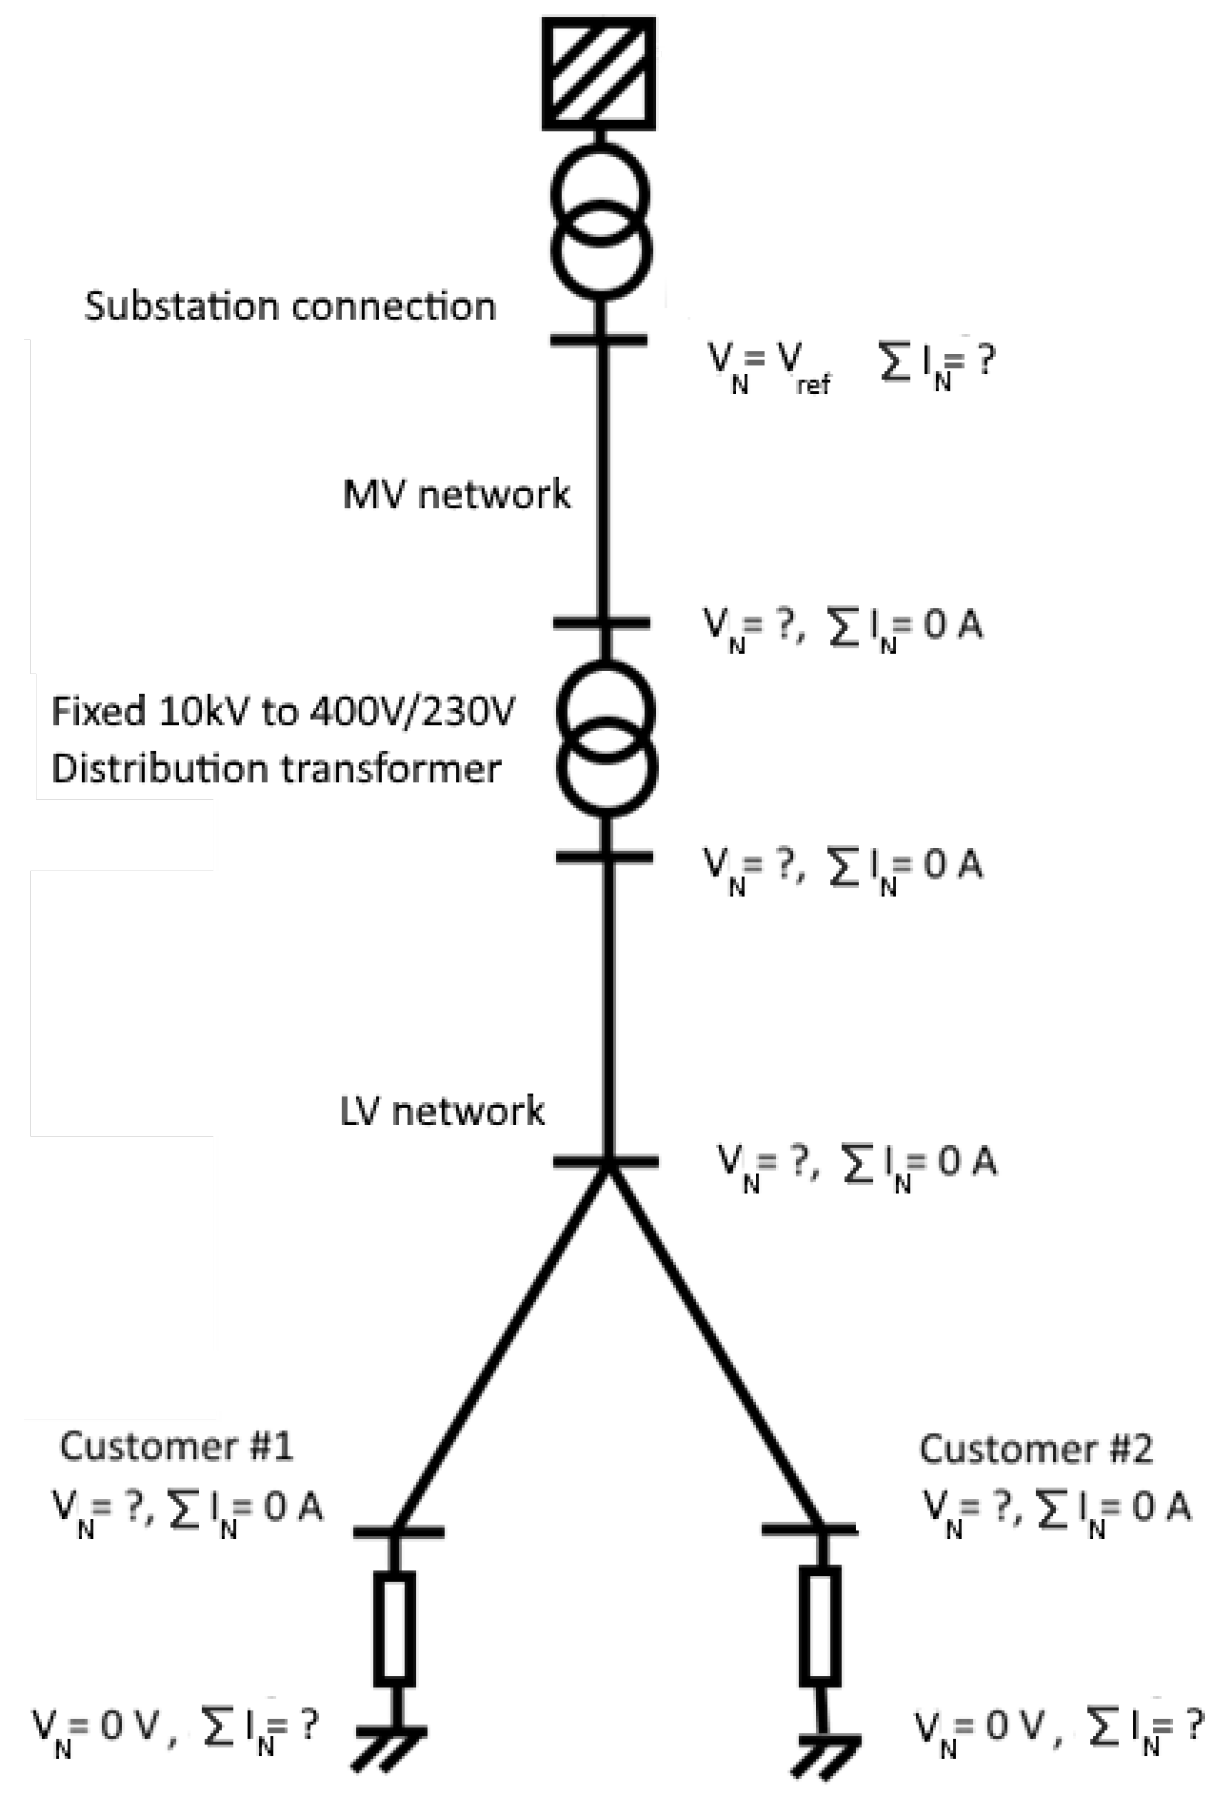 Single-line diagram of low-voltage (LV) network of building [21].